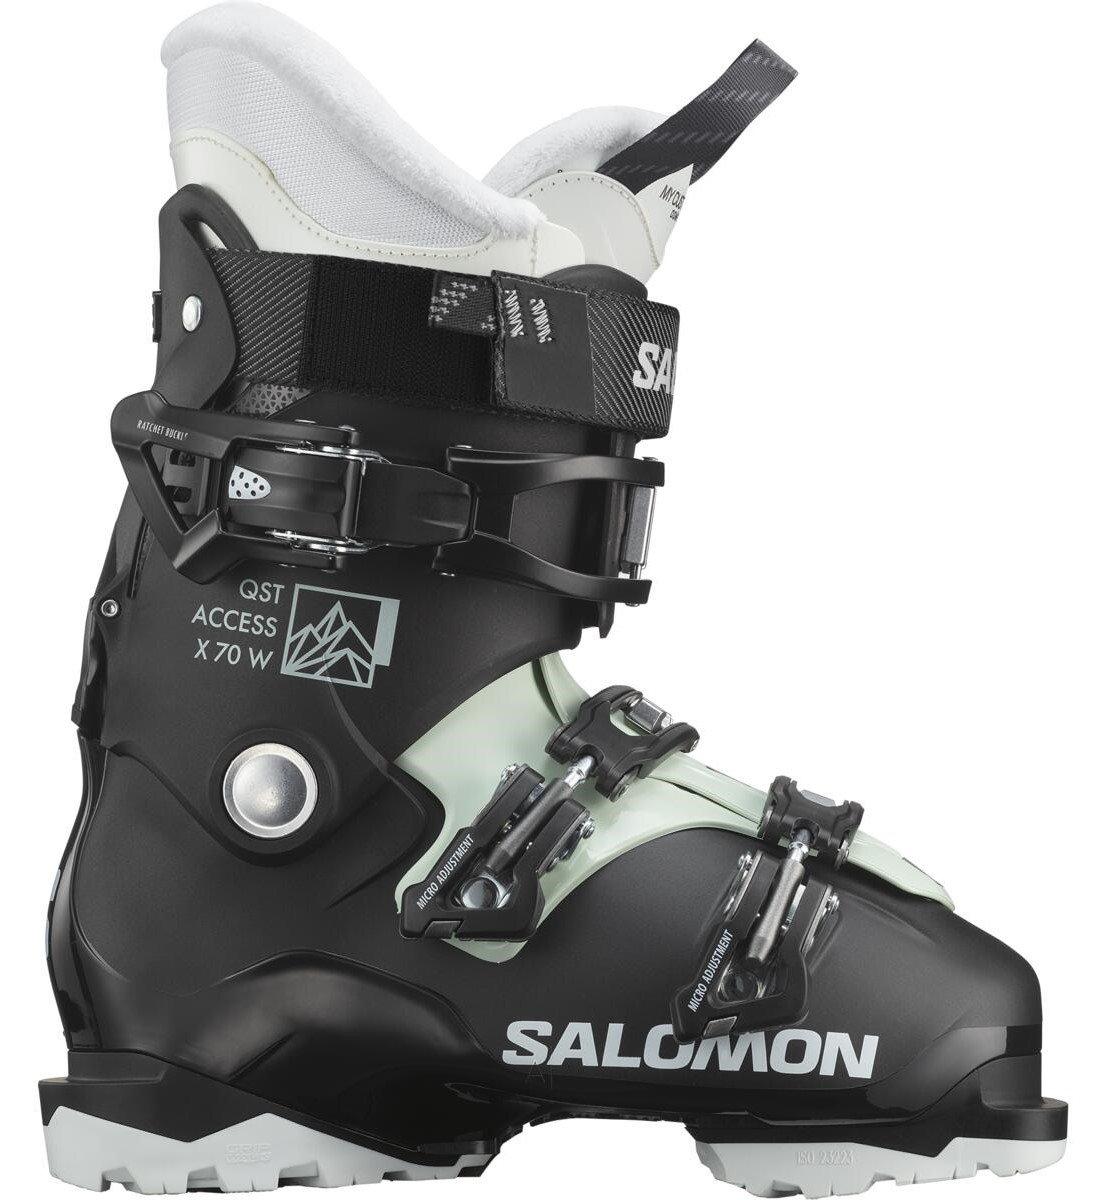 Dámske lyžiarky Salomon QST Access X70 W GW Veľkosť: 24 cm